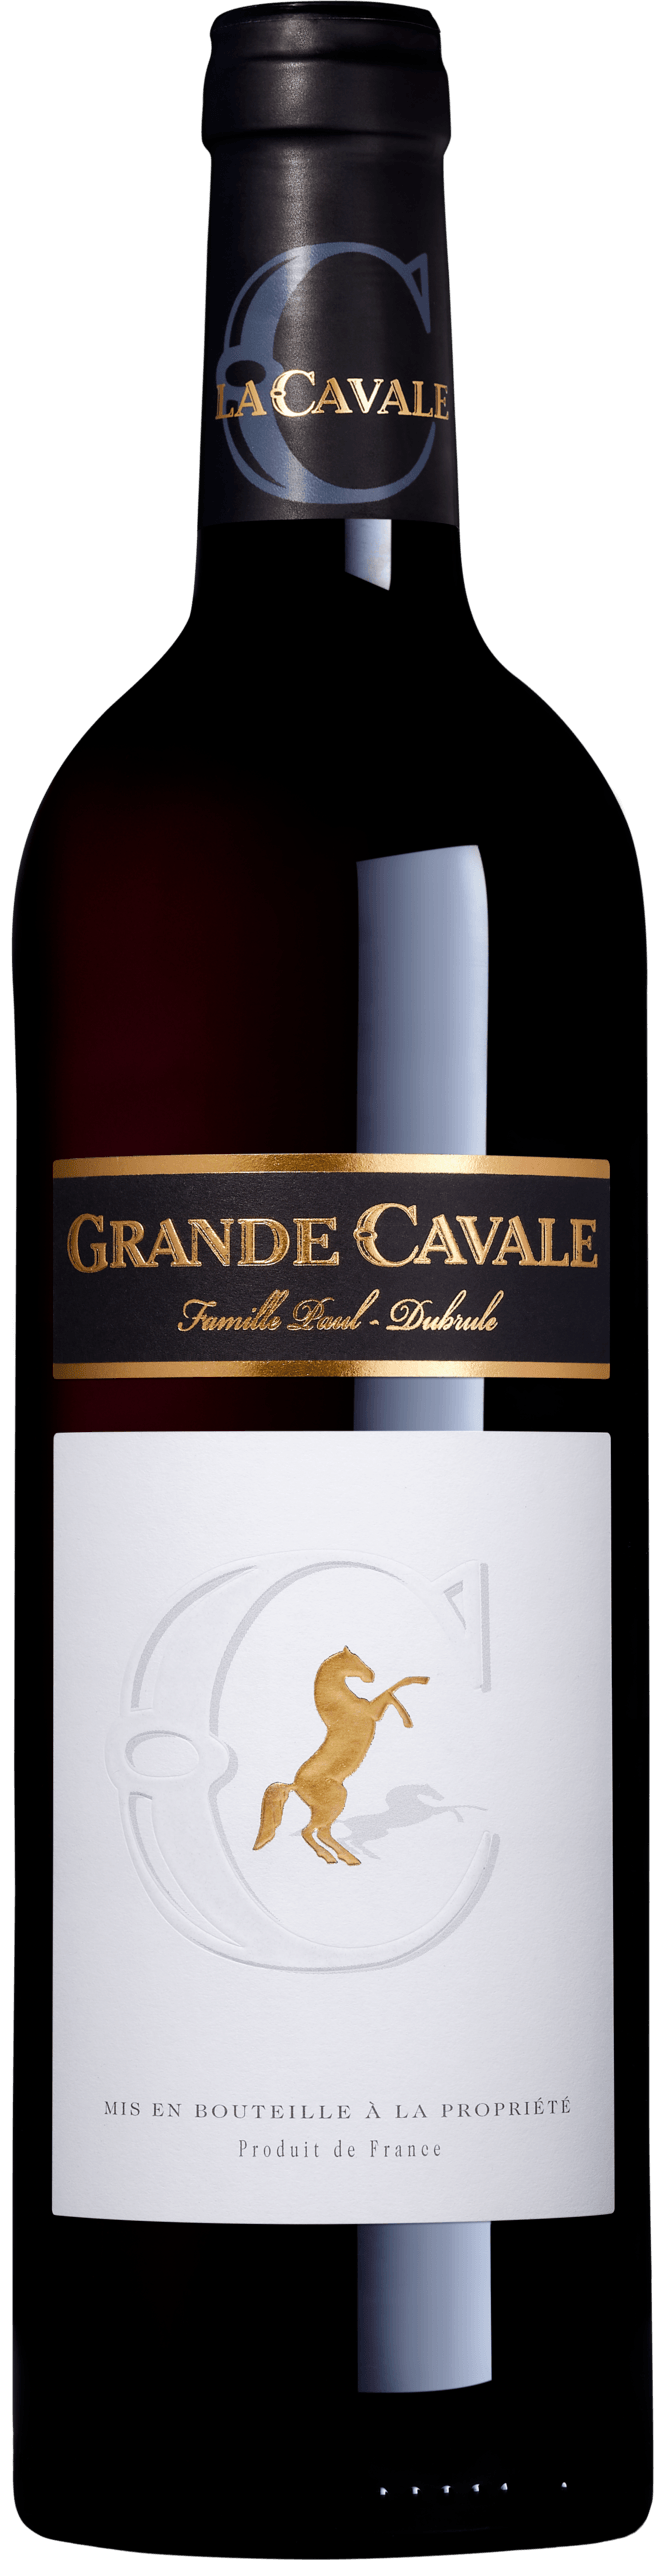 Grande Cavale rouge 2016 - Domaine La Cavale